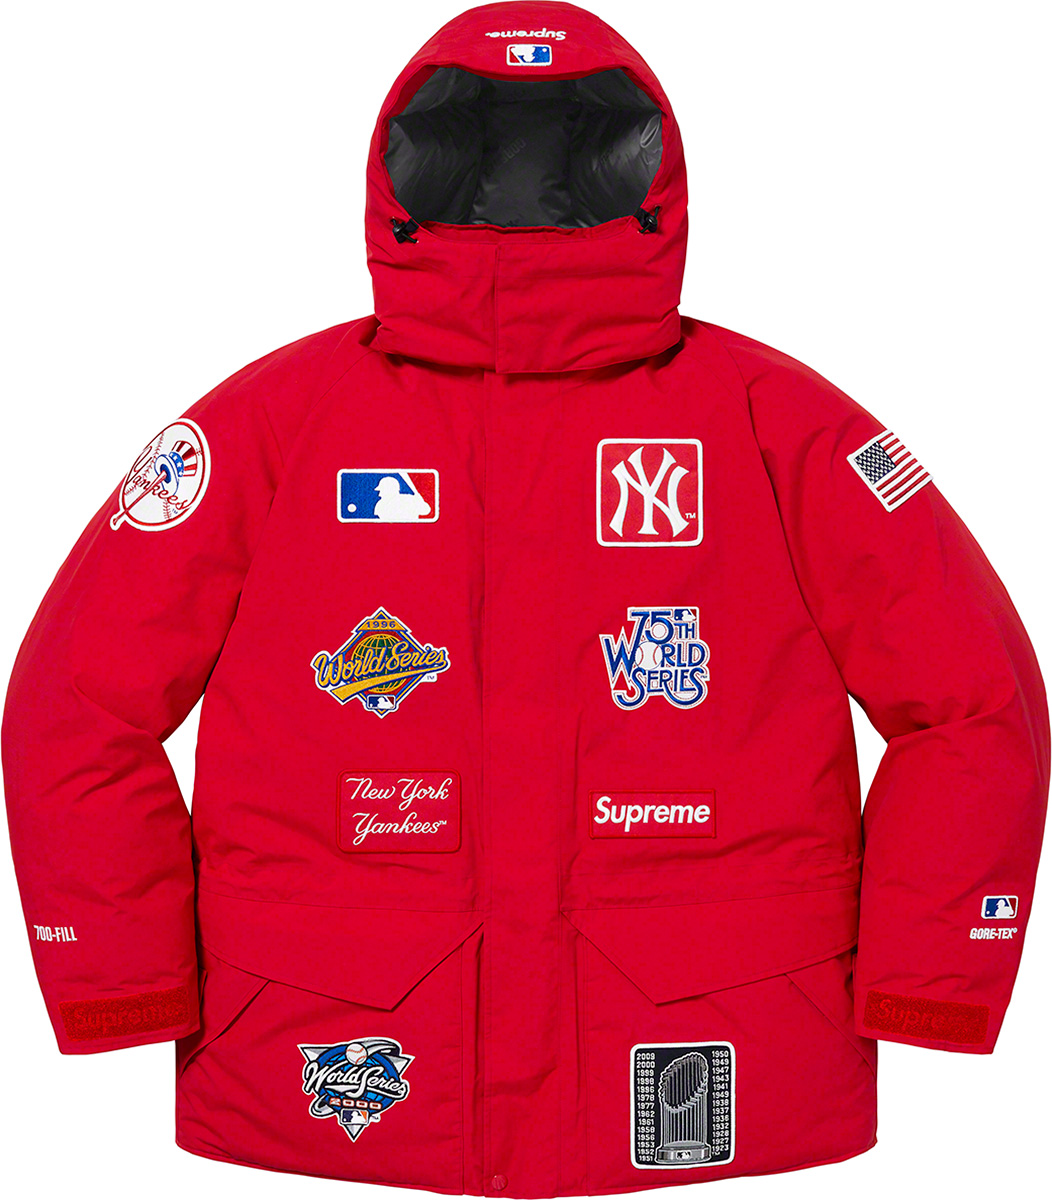 new york yankees supreme jacket Off 76% - www.svrinfotech.net